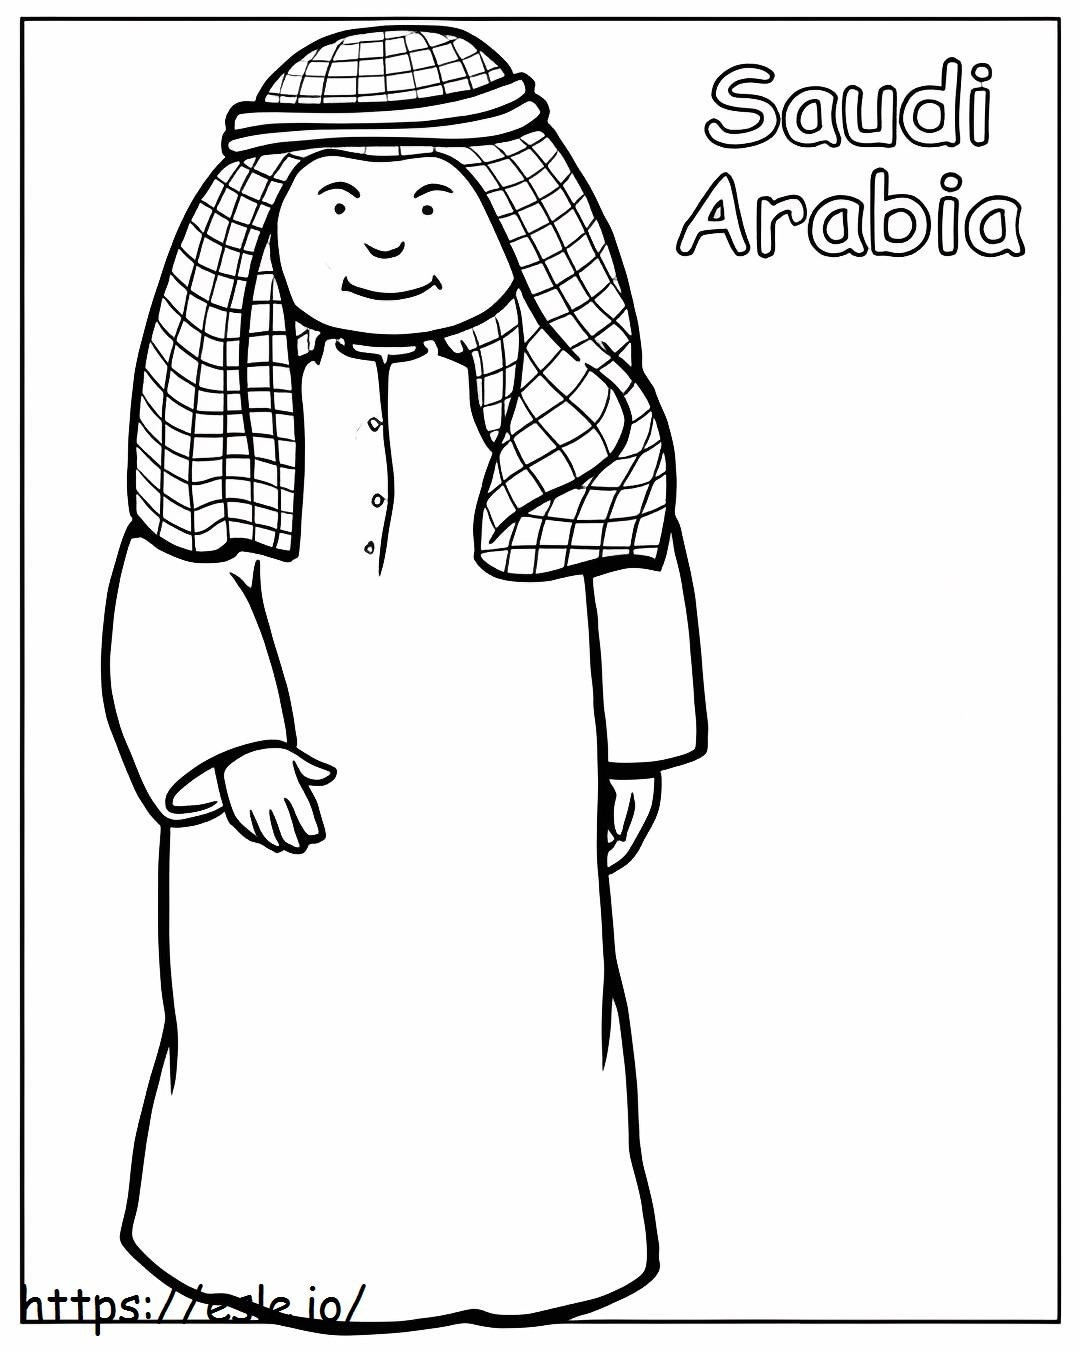 Saudi Arabia Man coloring page